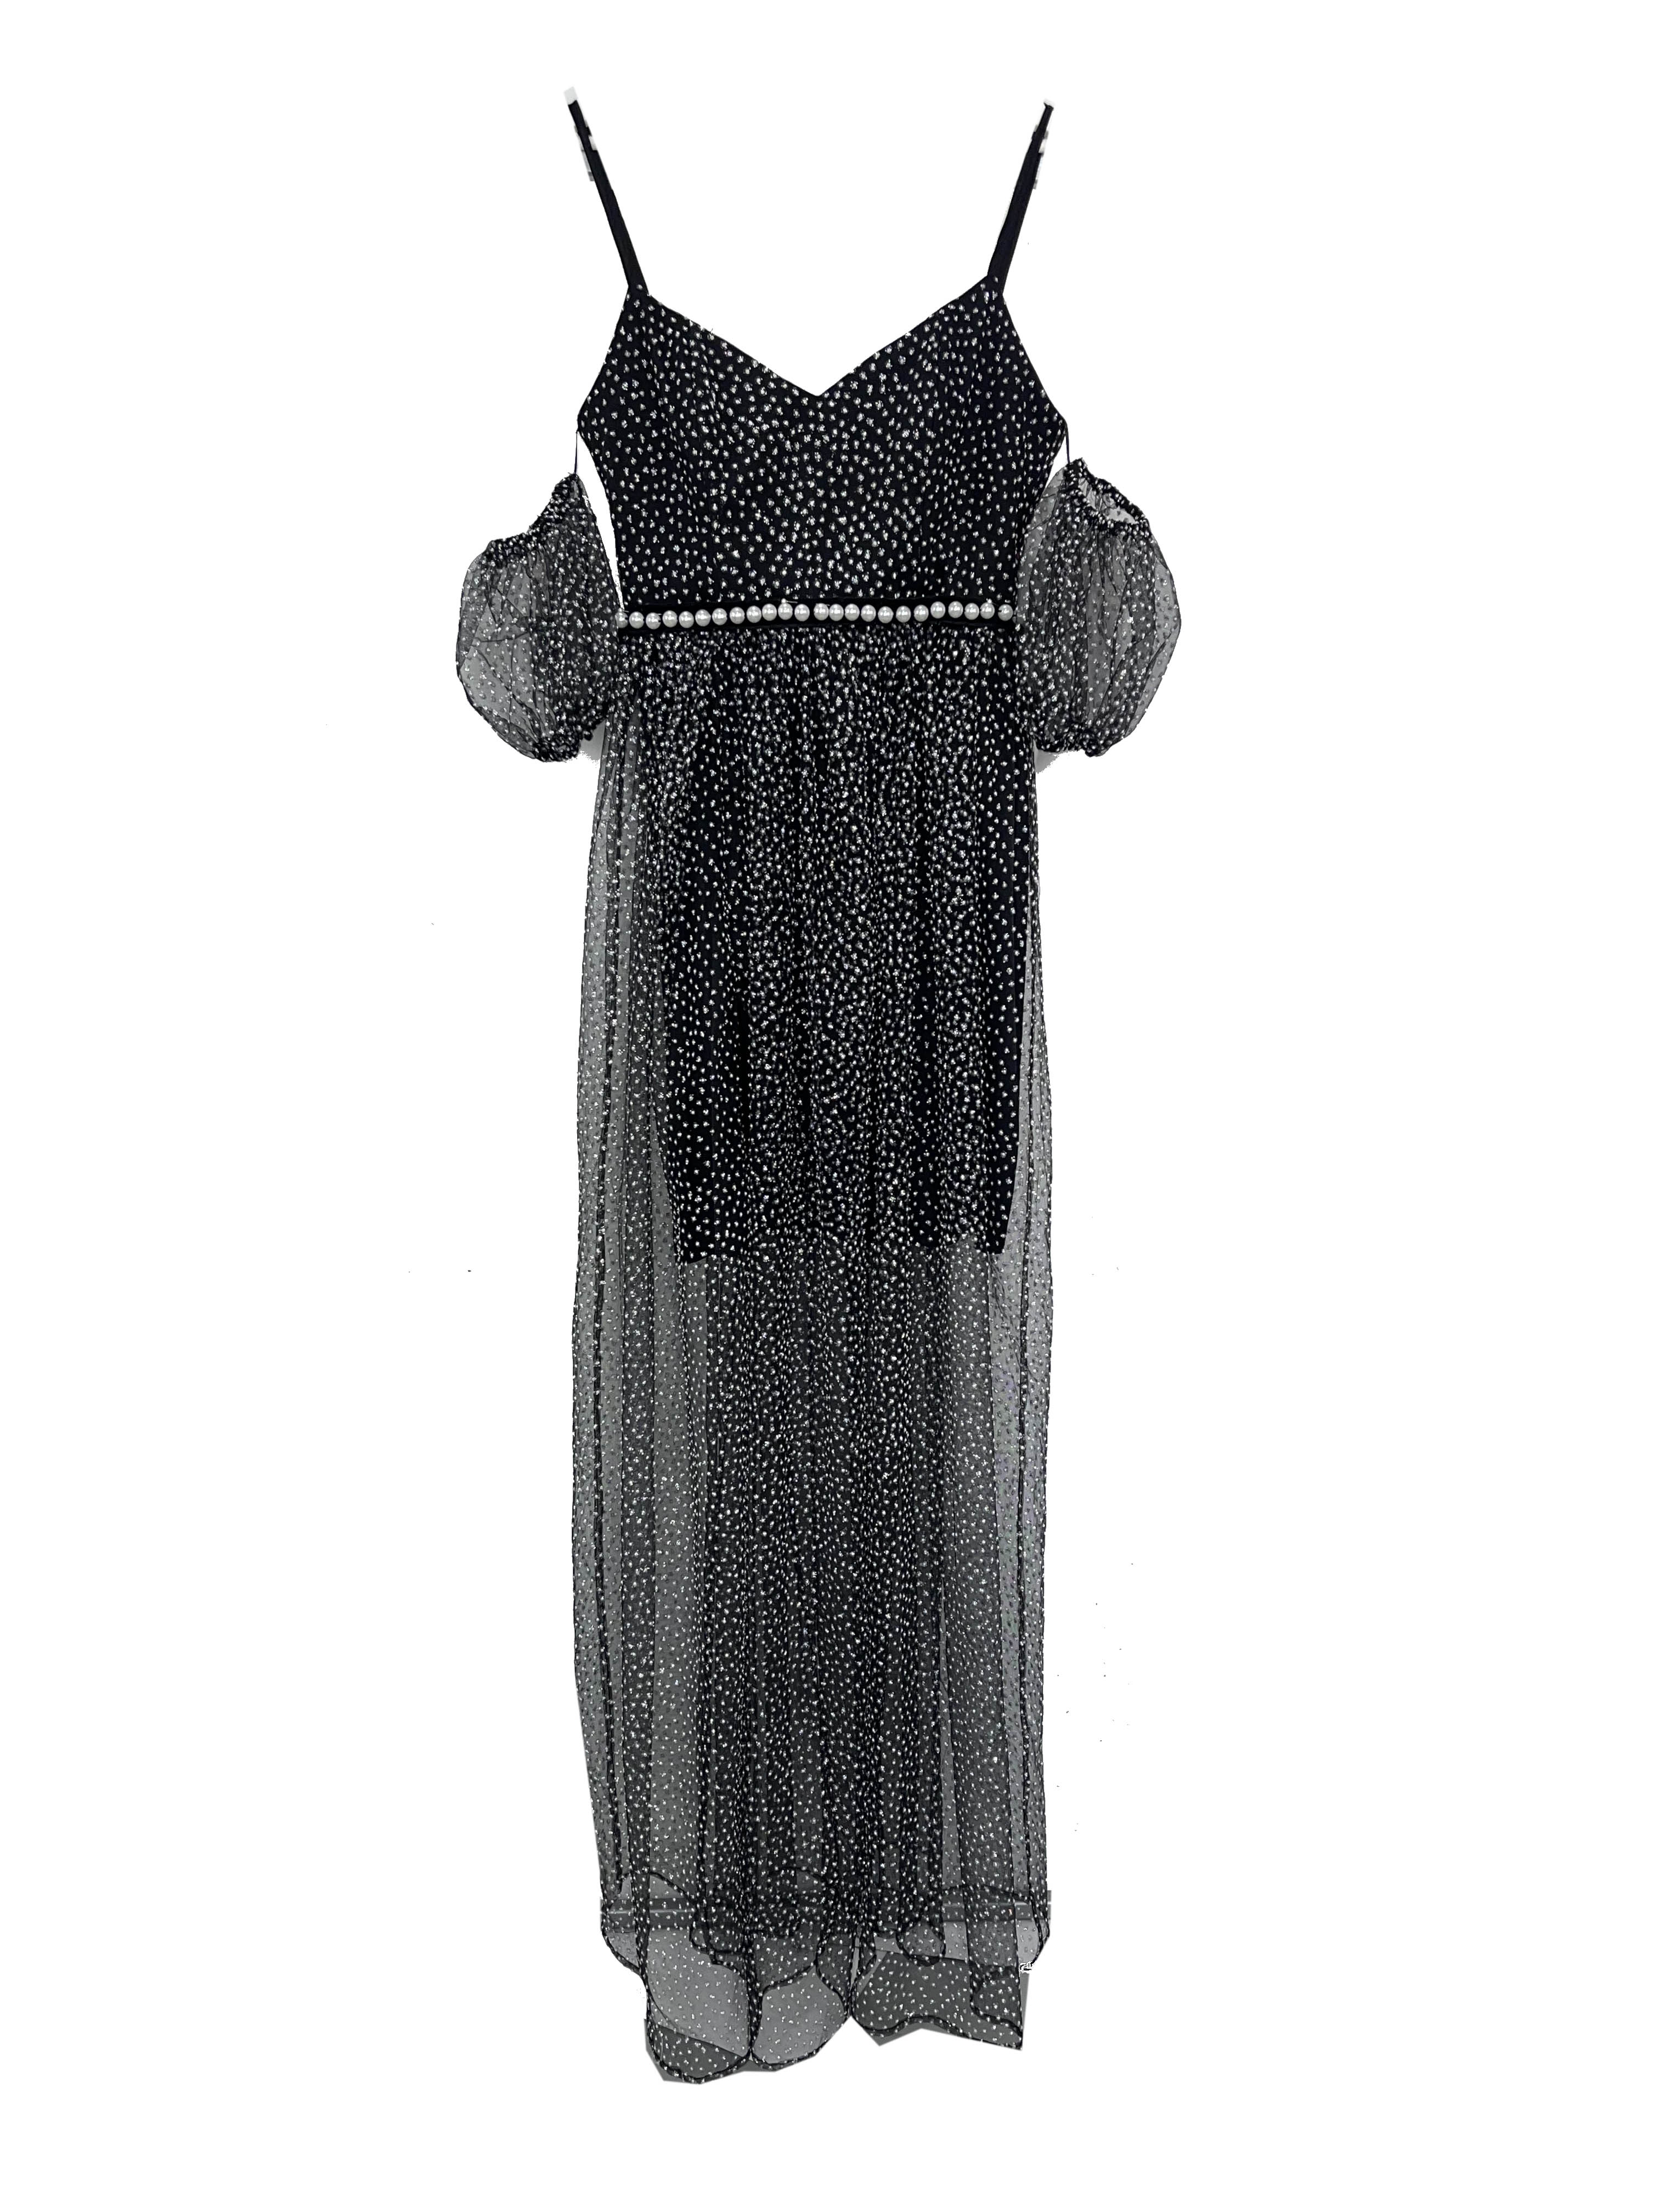 R24109 01 - ZAHIA black long dress with glitter